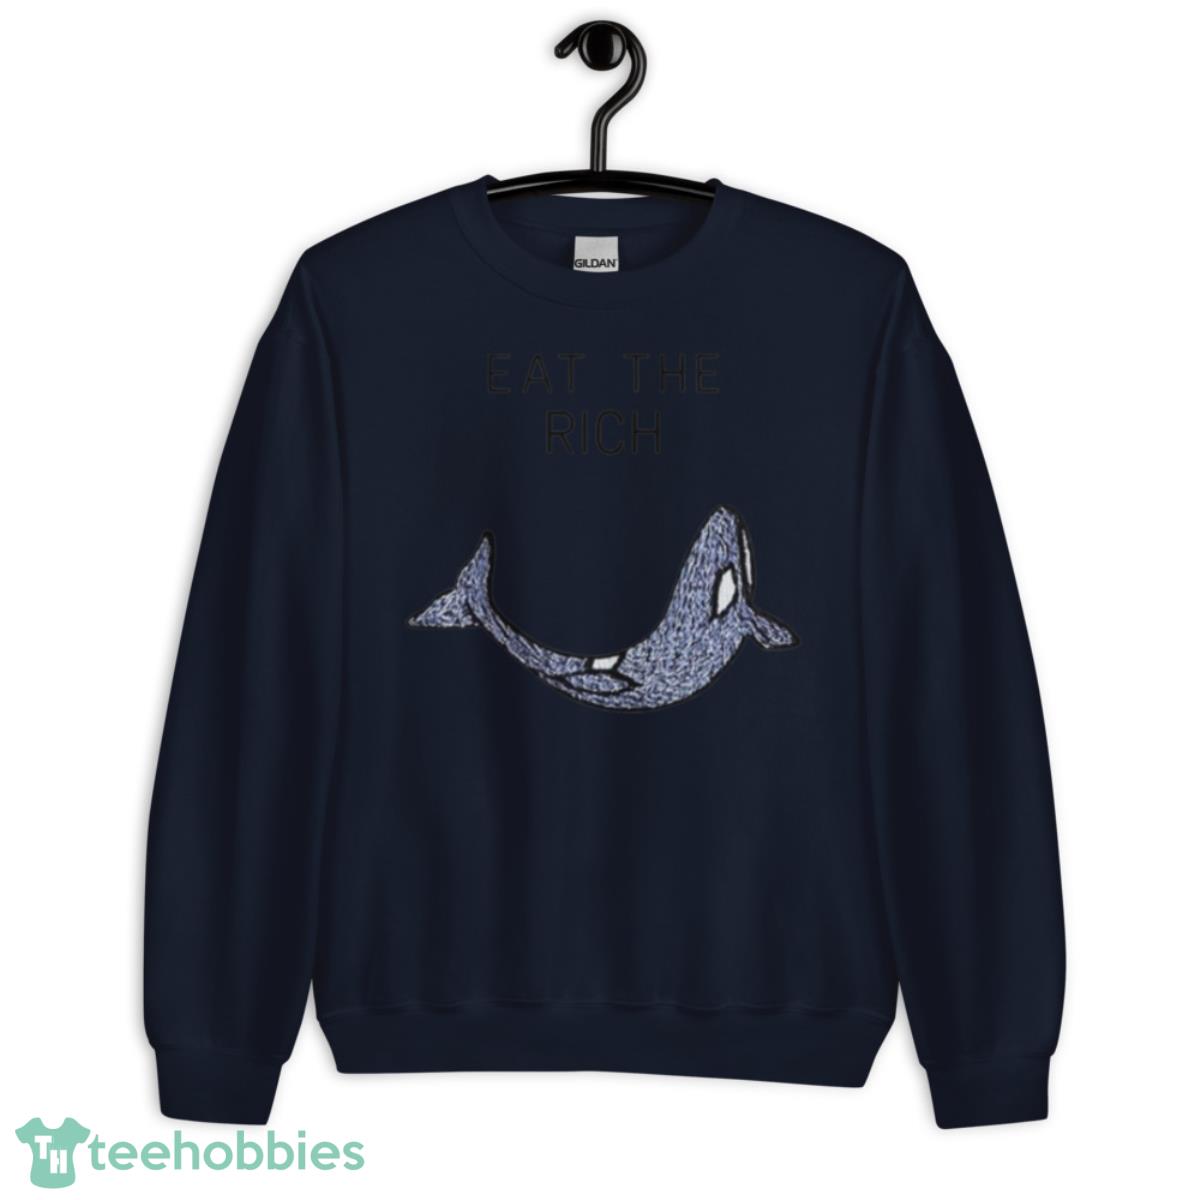 Shark eat the rich shirt - Unisex Crewneck Sweatshirt-1